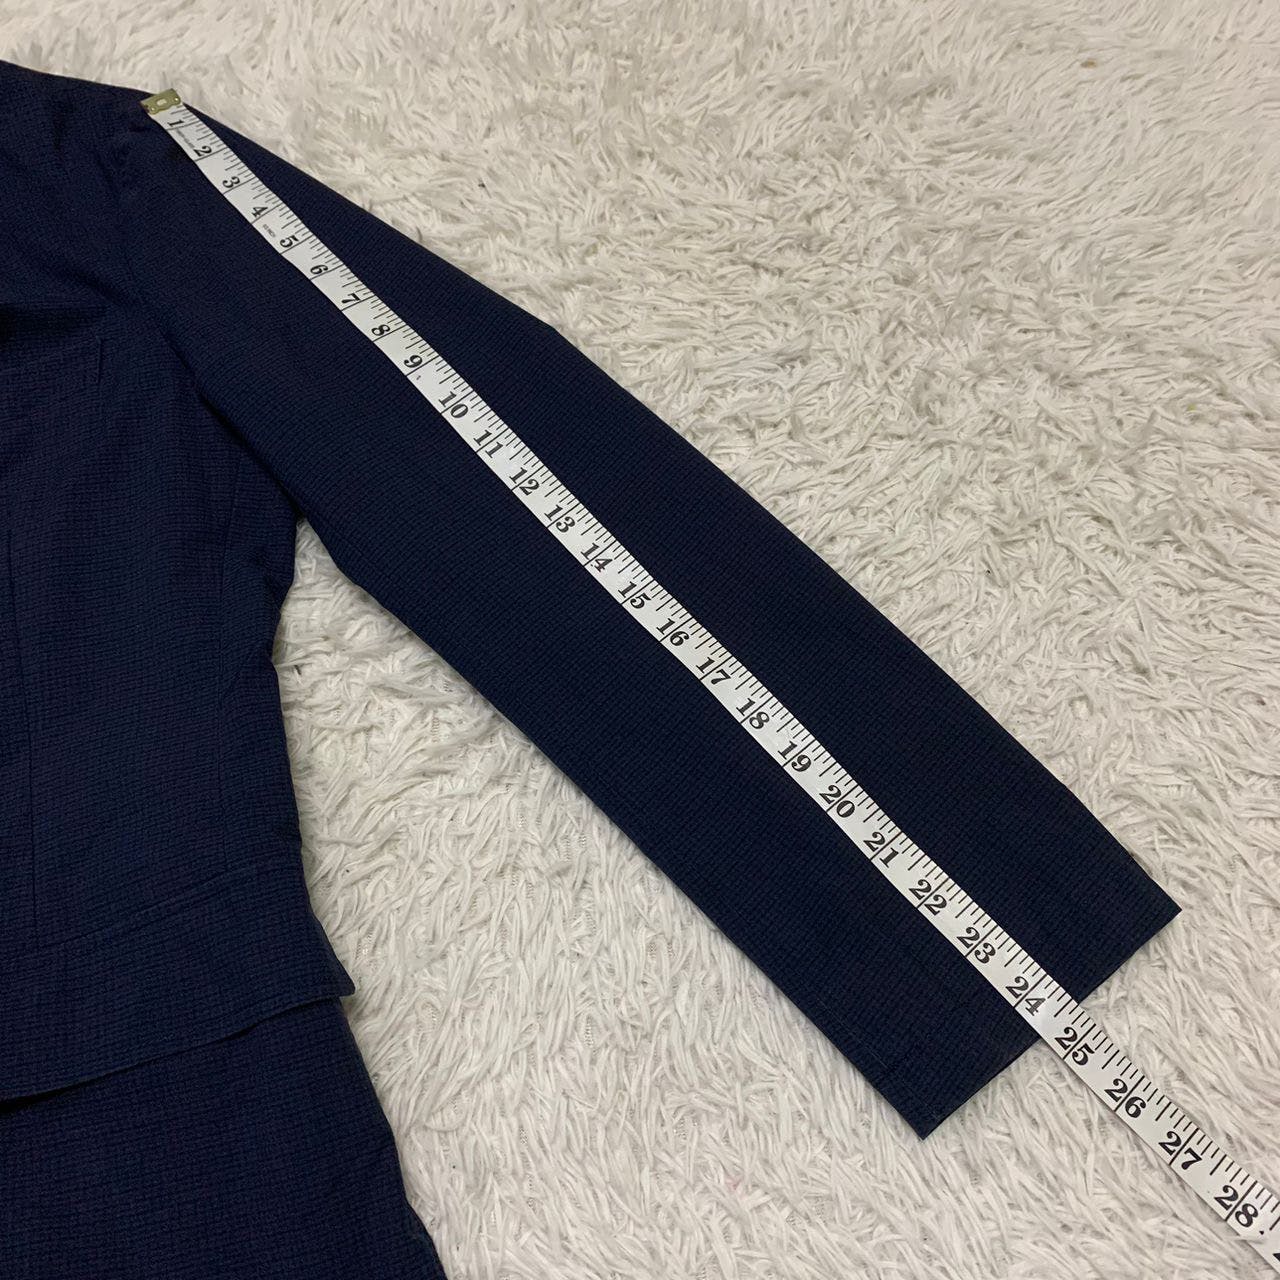 Mackintosh Philosophy Coolmax Fabric Coat Jacket - 8